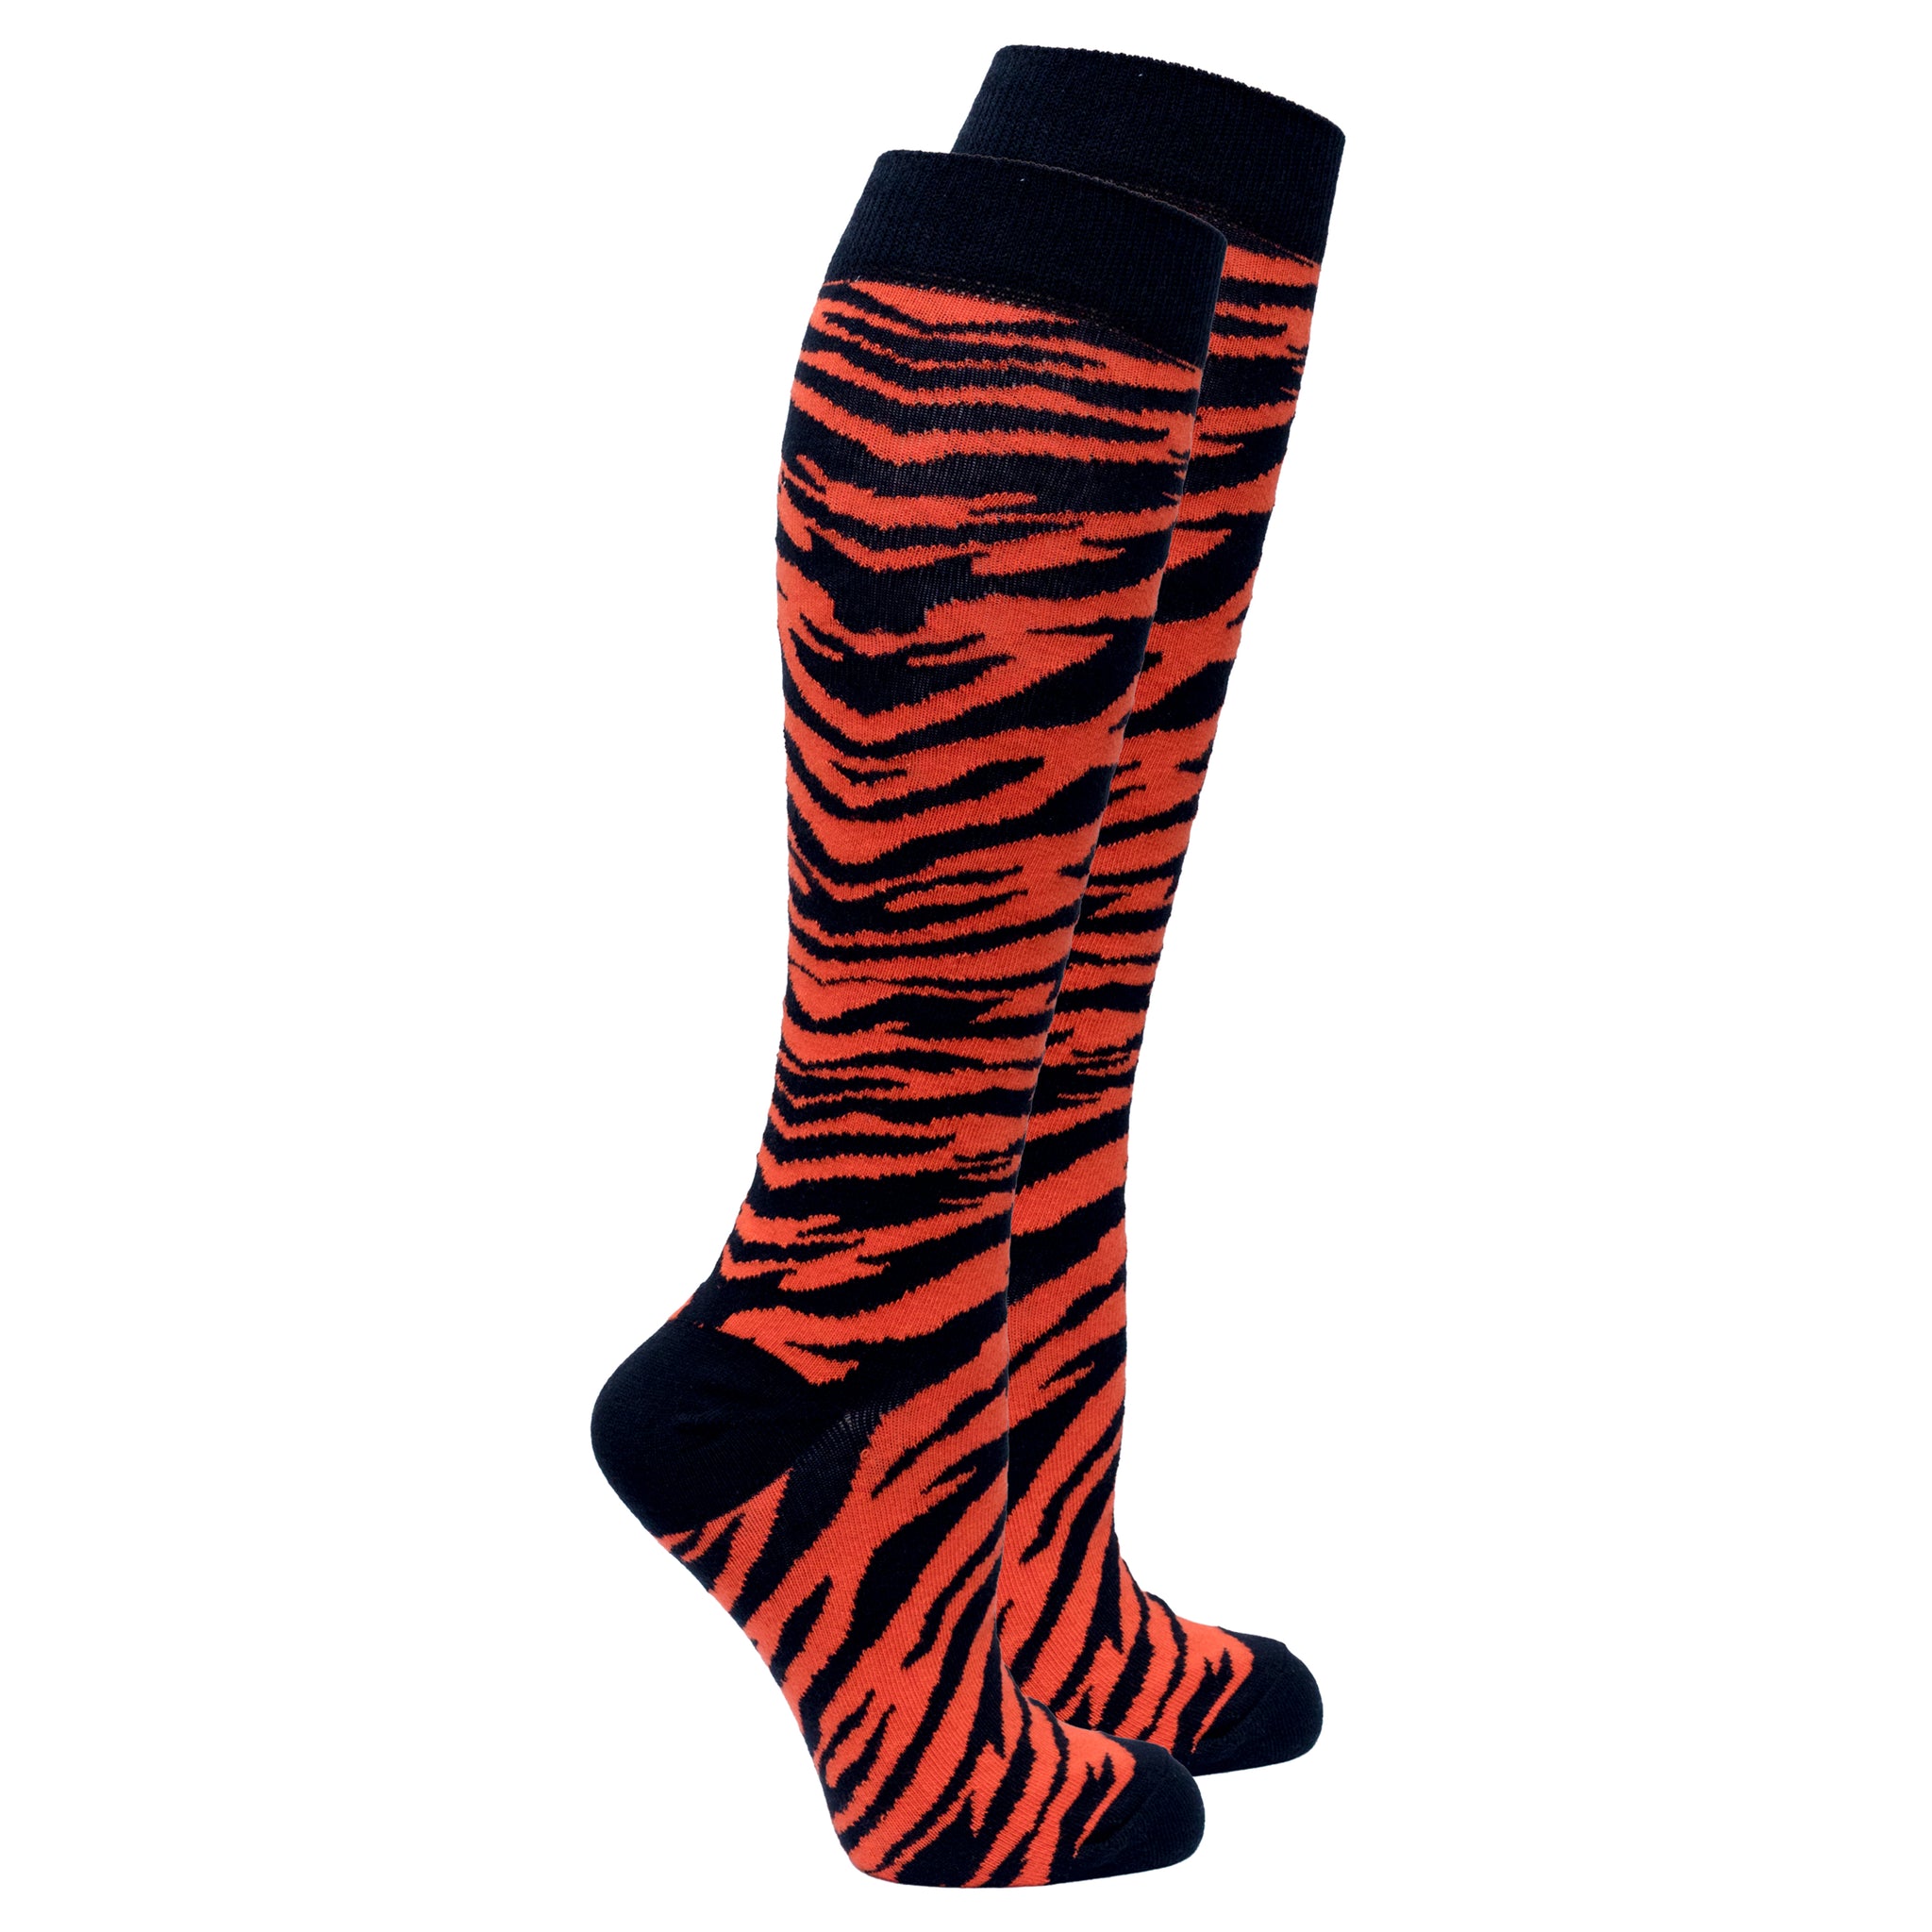 Women's Tiger Knee High Socks